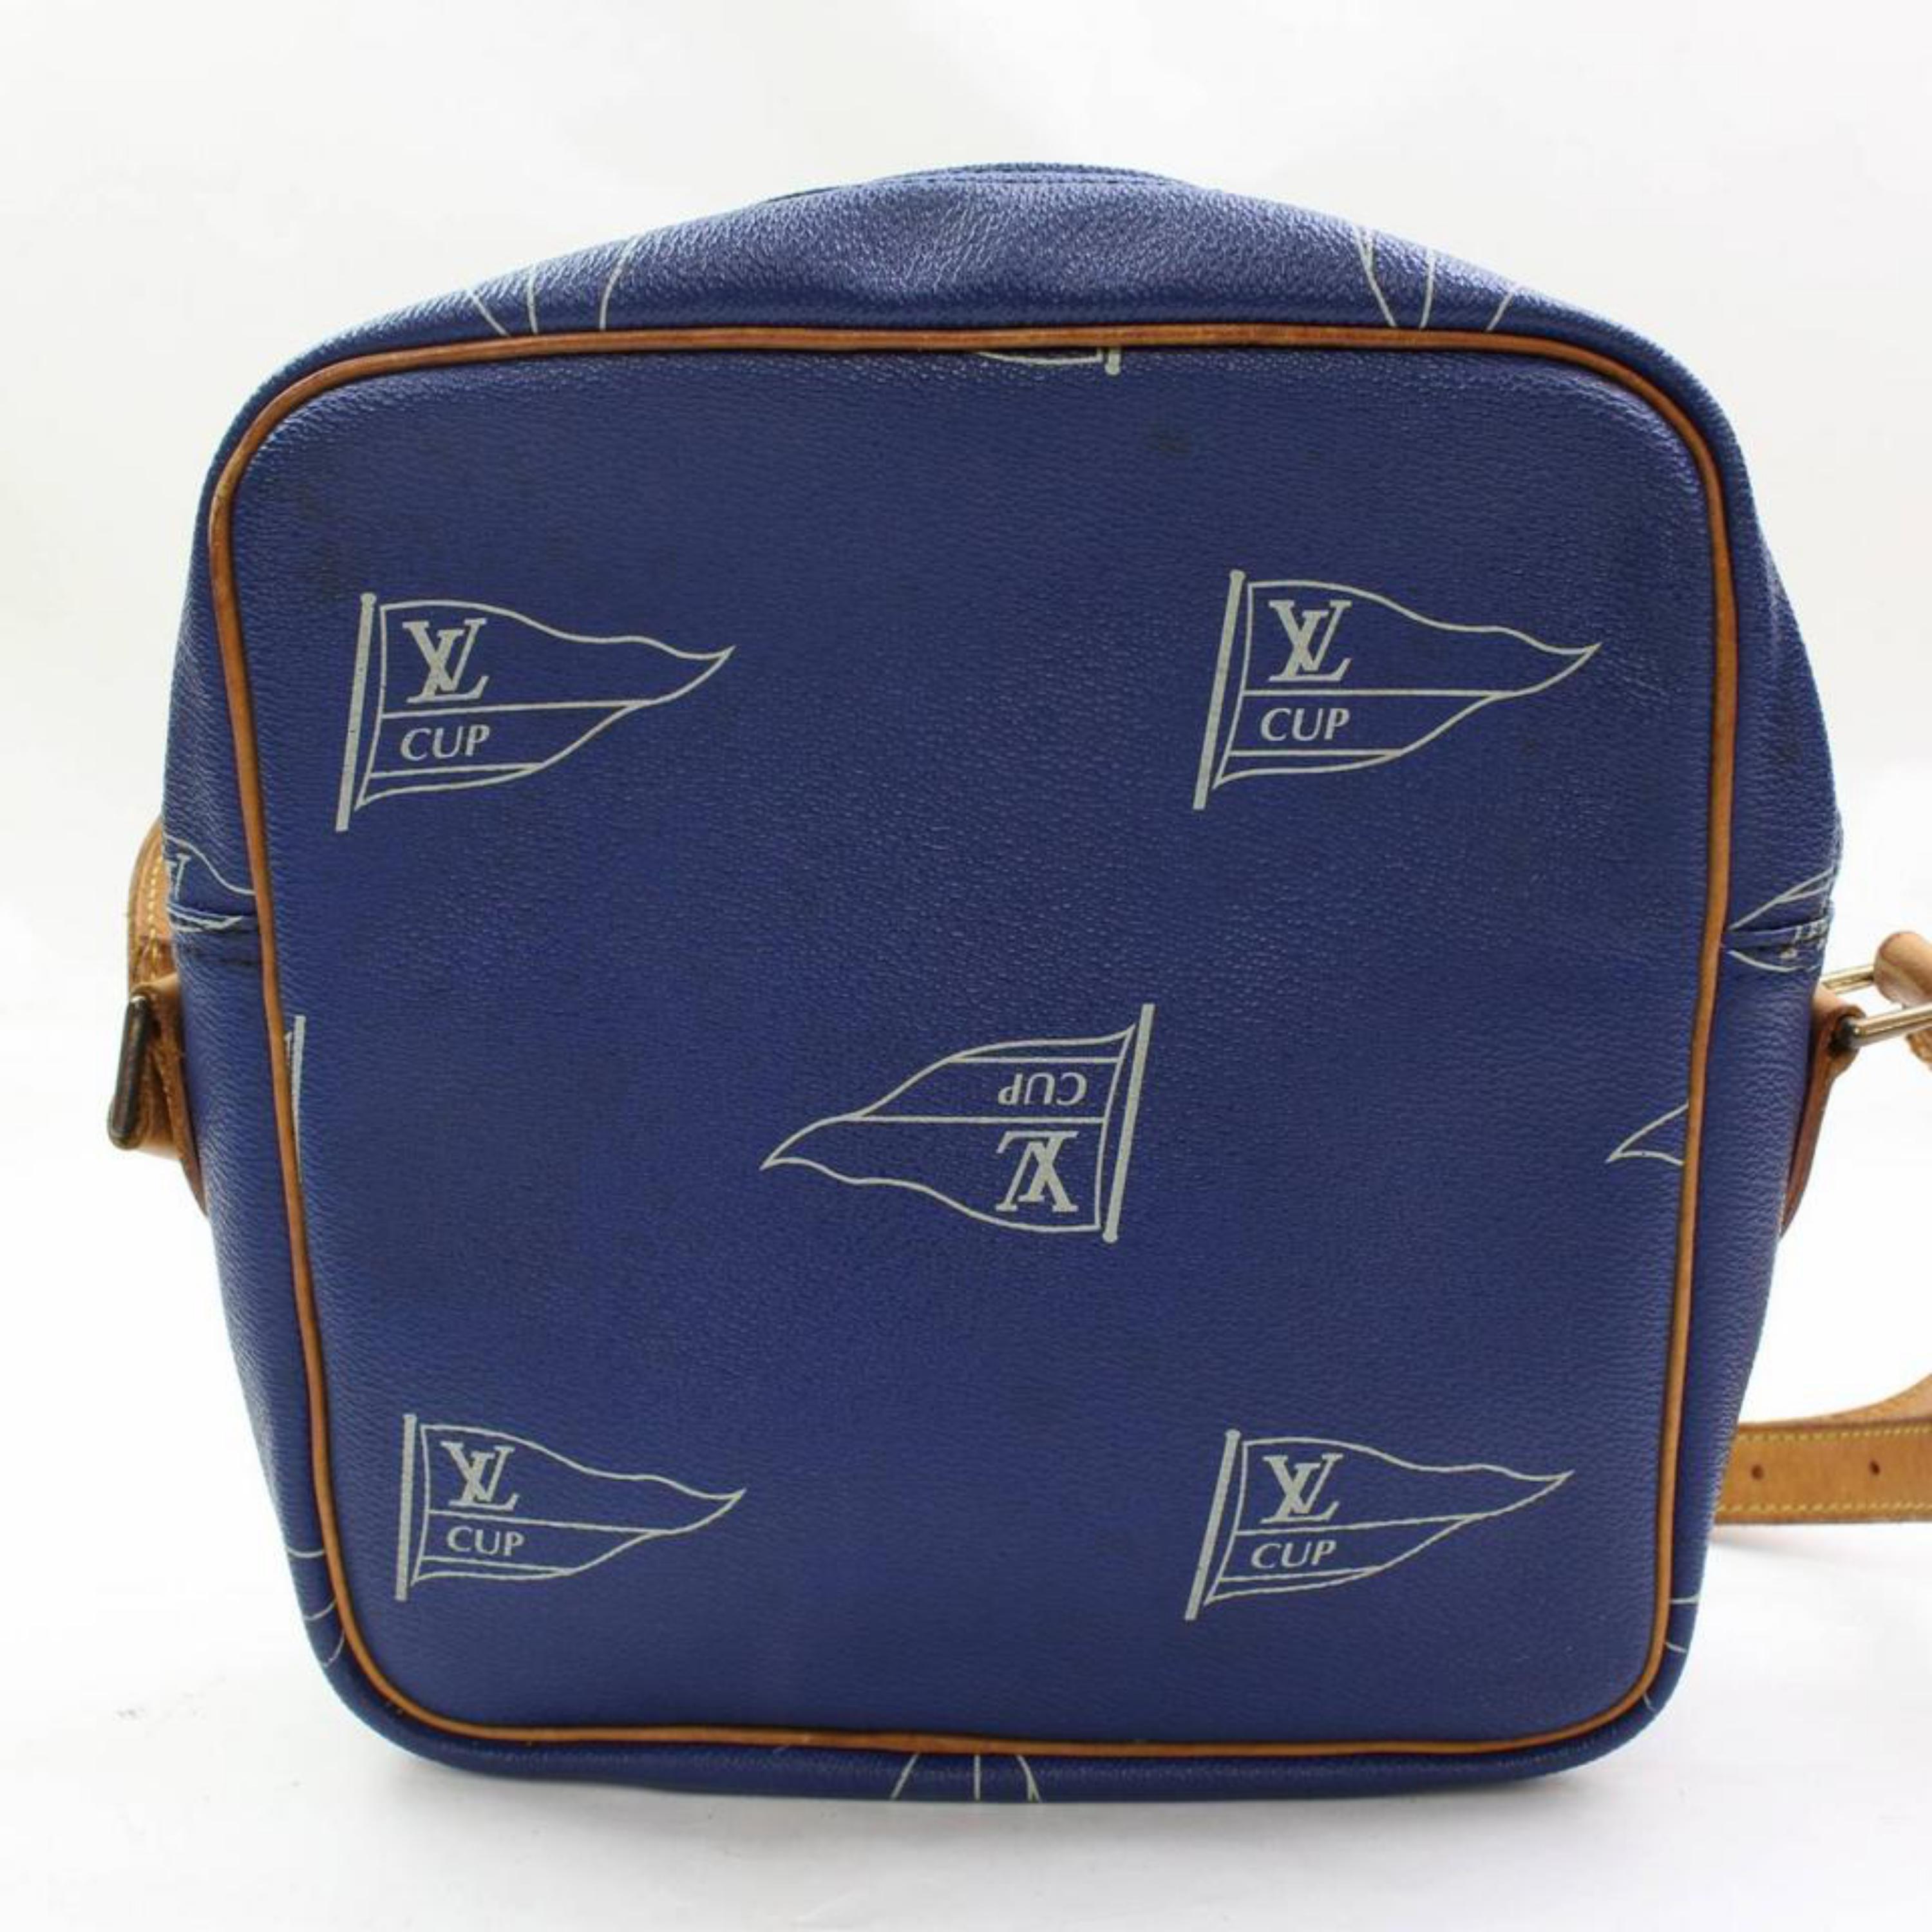 Louis Vuitton Lv Cup Sac San Diego 867246 Blue Coated Canvas Shoulder Bag For Sale 2